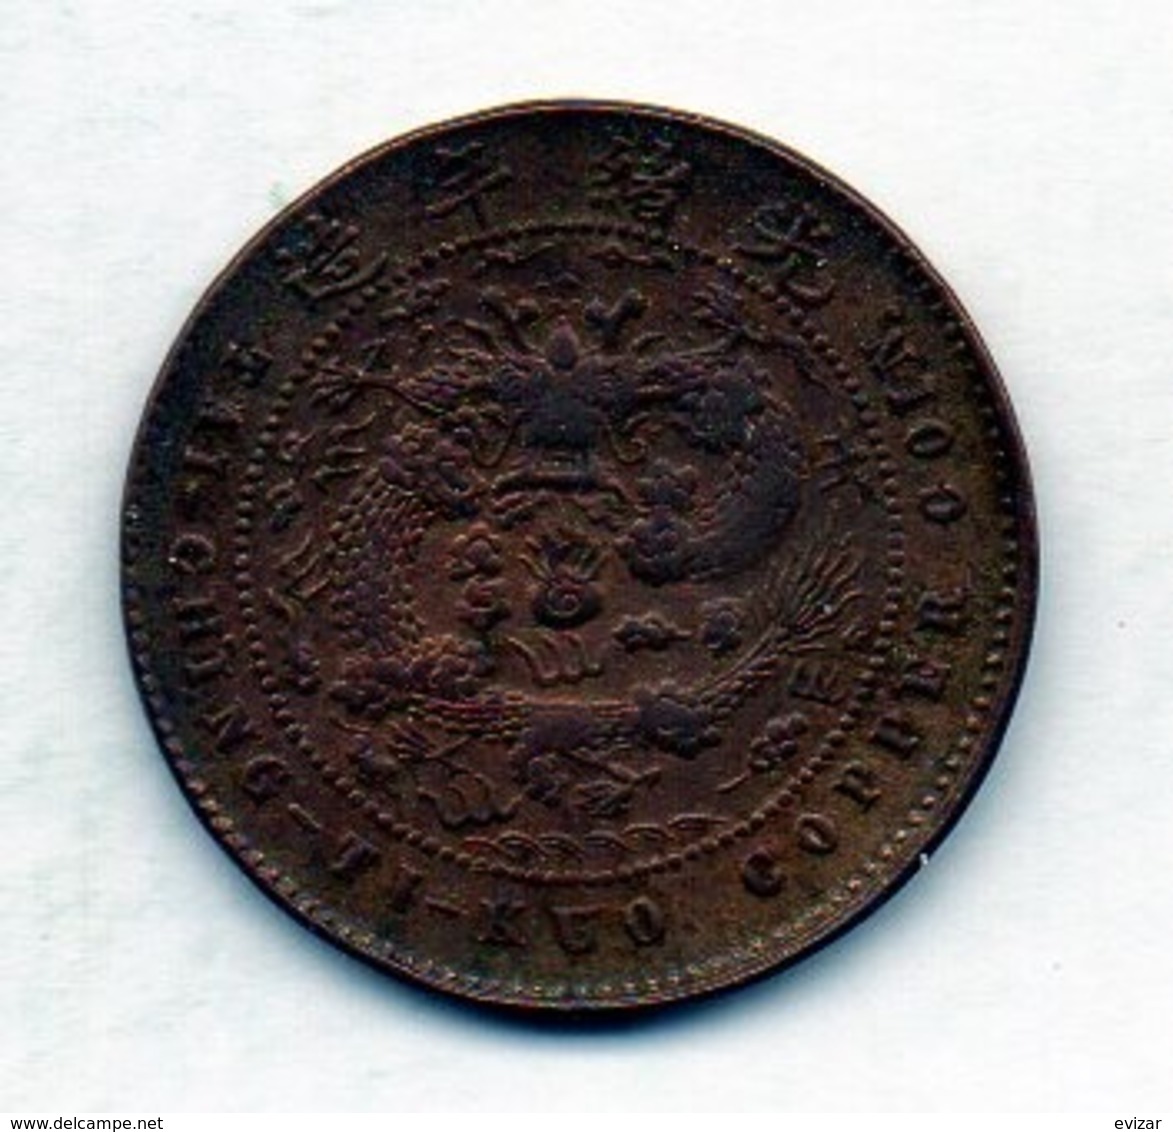 CHINA - EMPIRE, 5 Cash, Copper, Year  1905, KM #9 - China